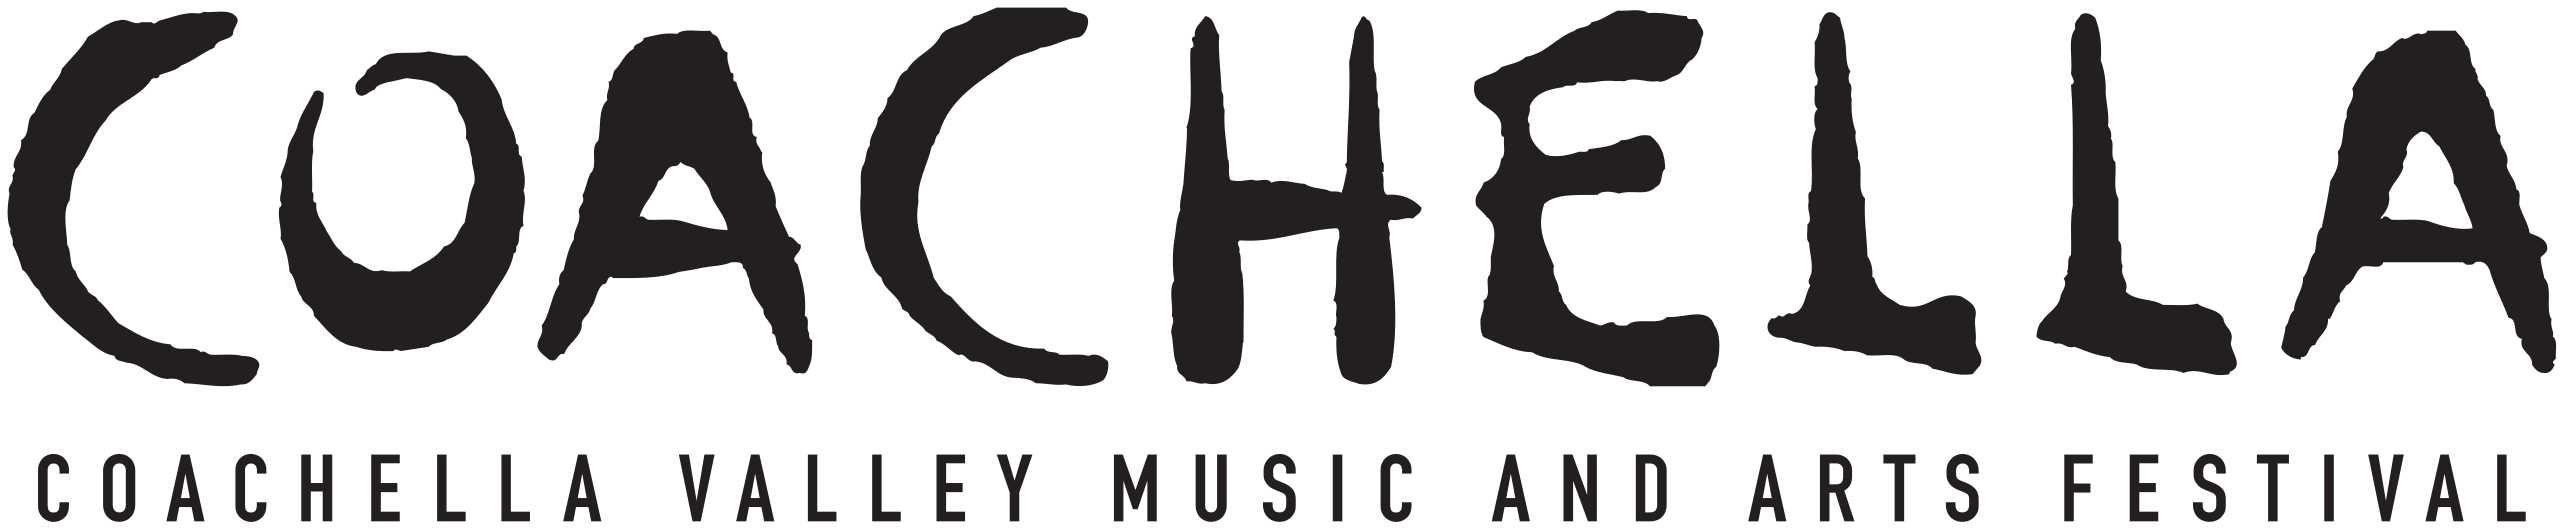 Coachella_Valley_Music_and_Arts_Festival_logo.svg